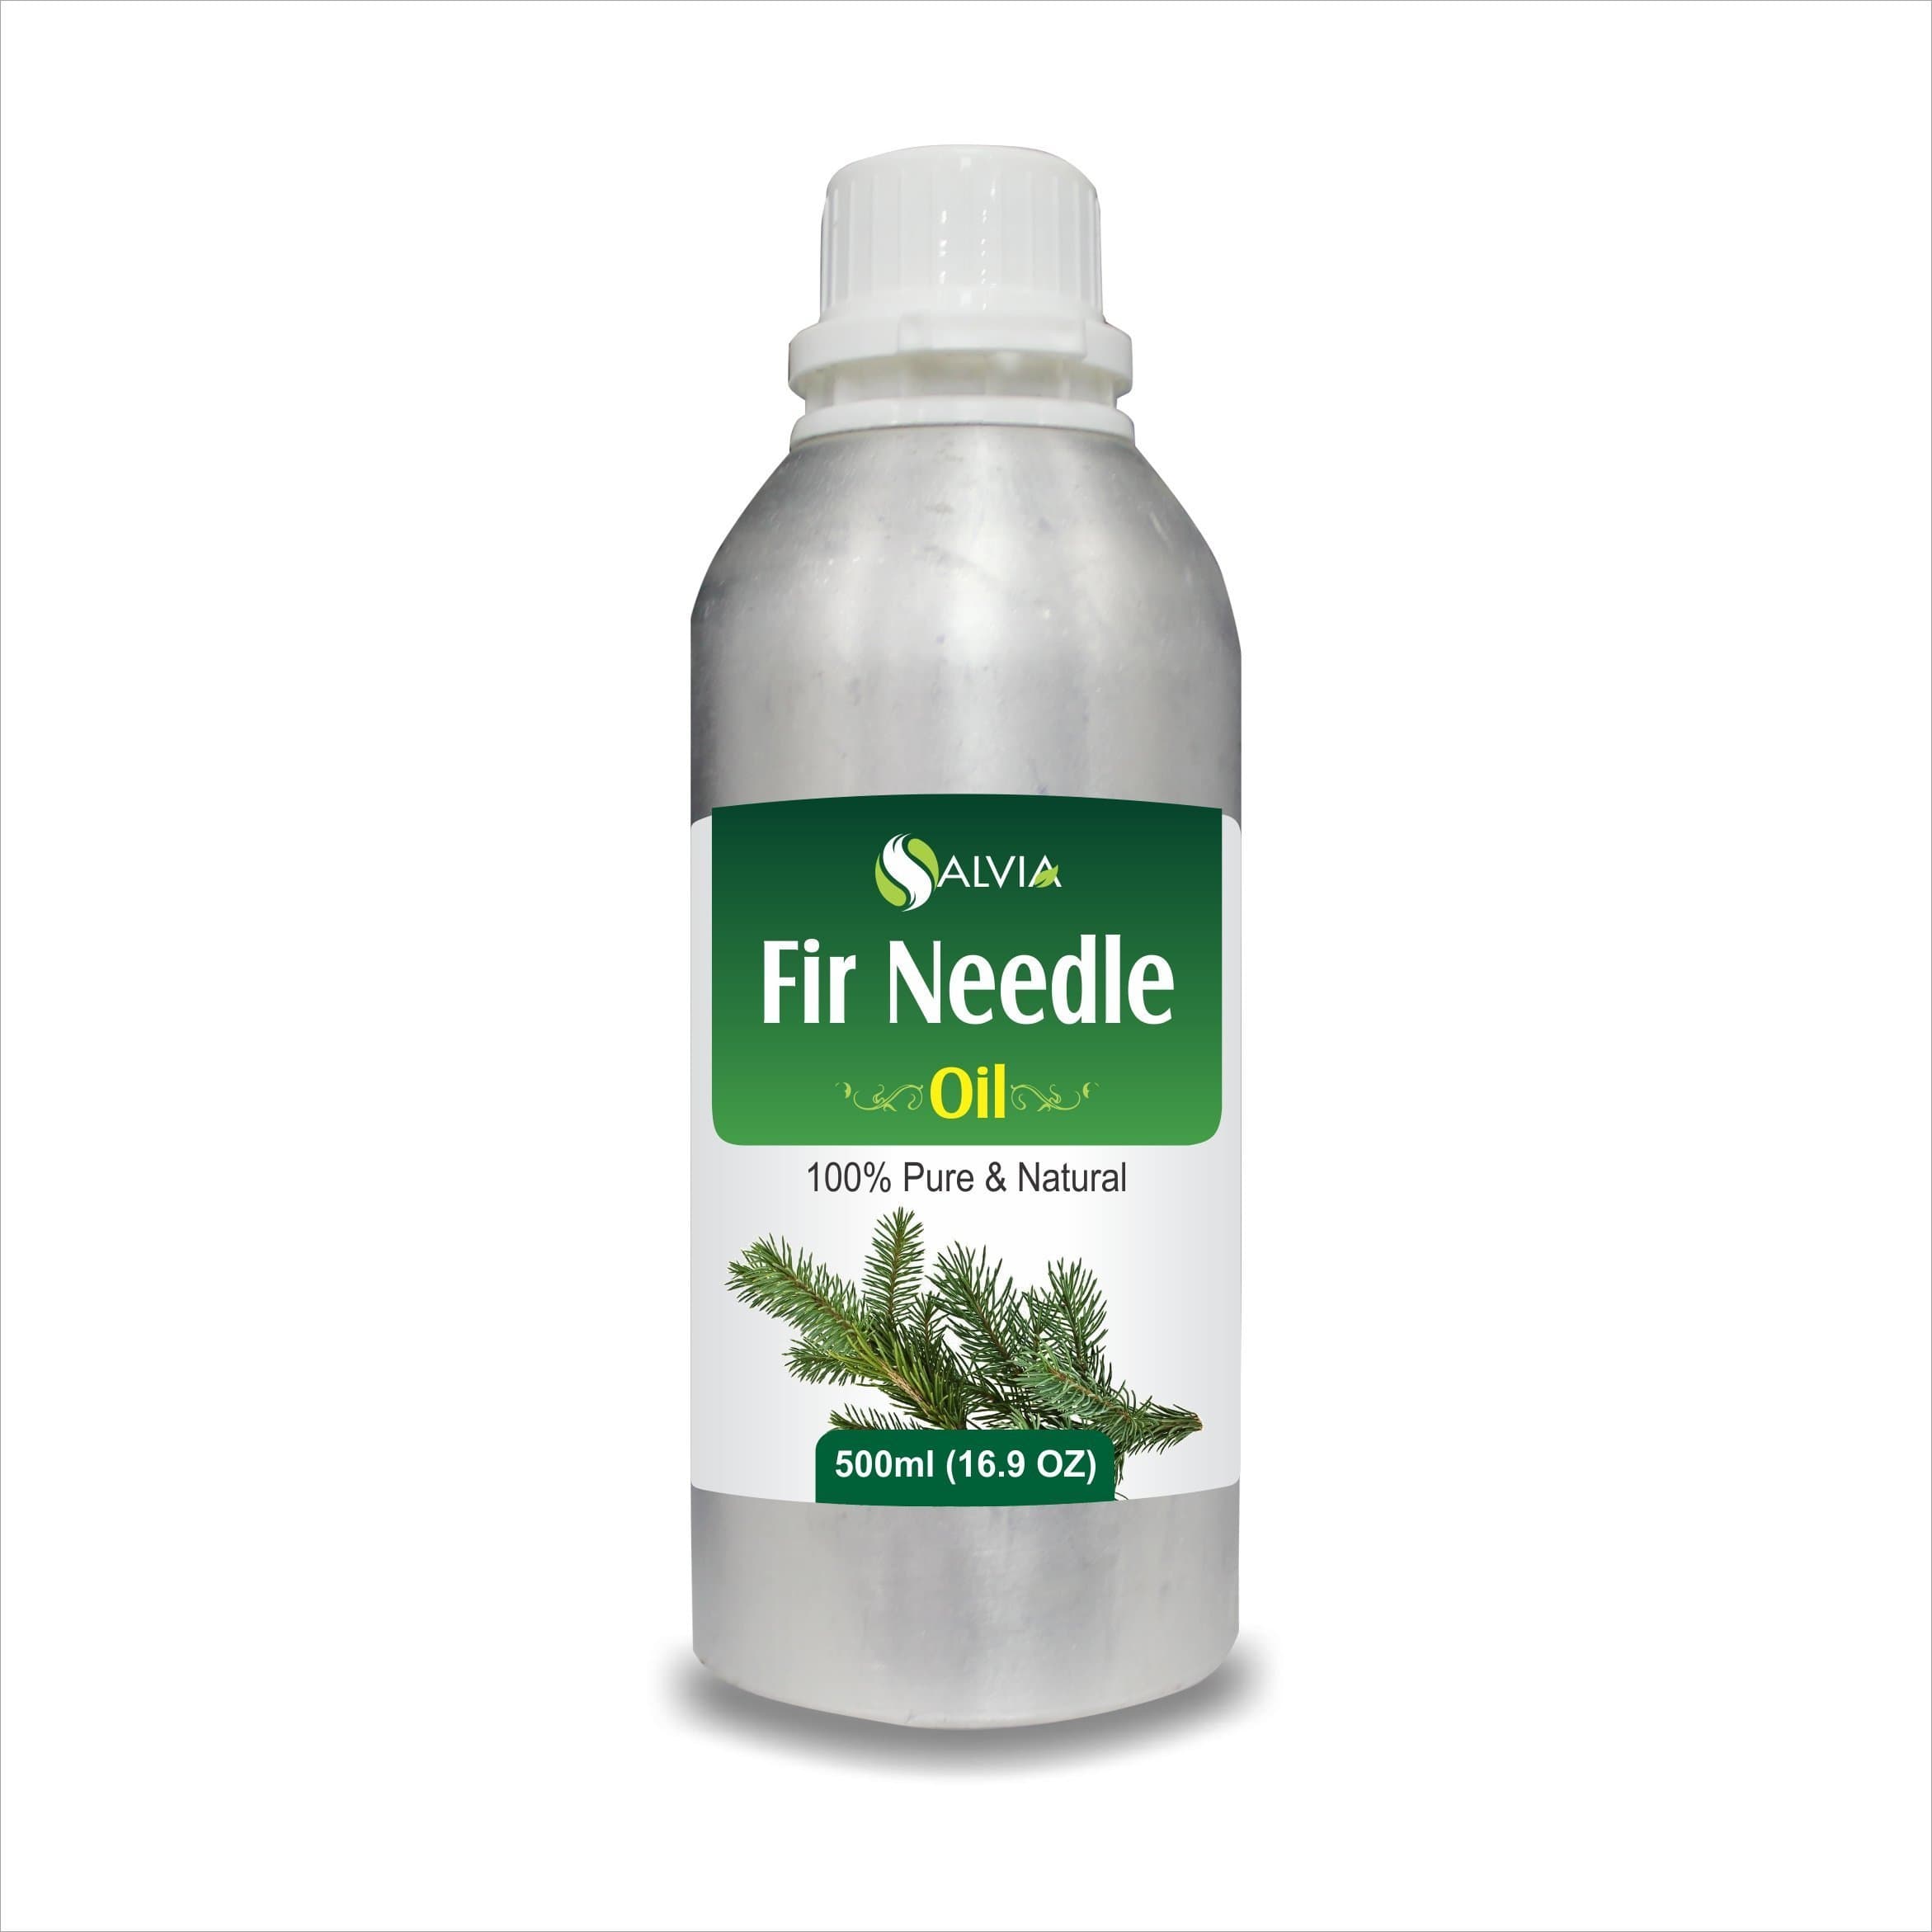 fir needle essential oil recipes